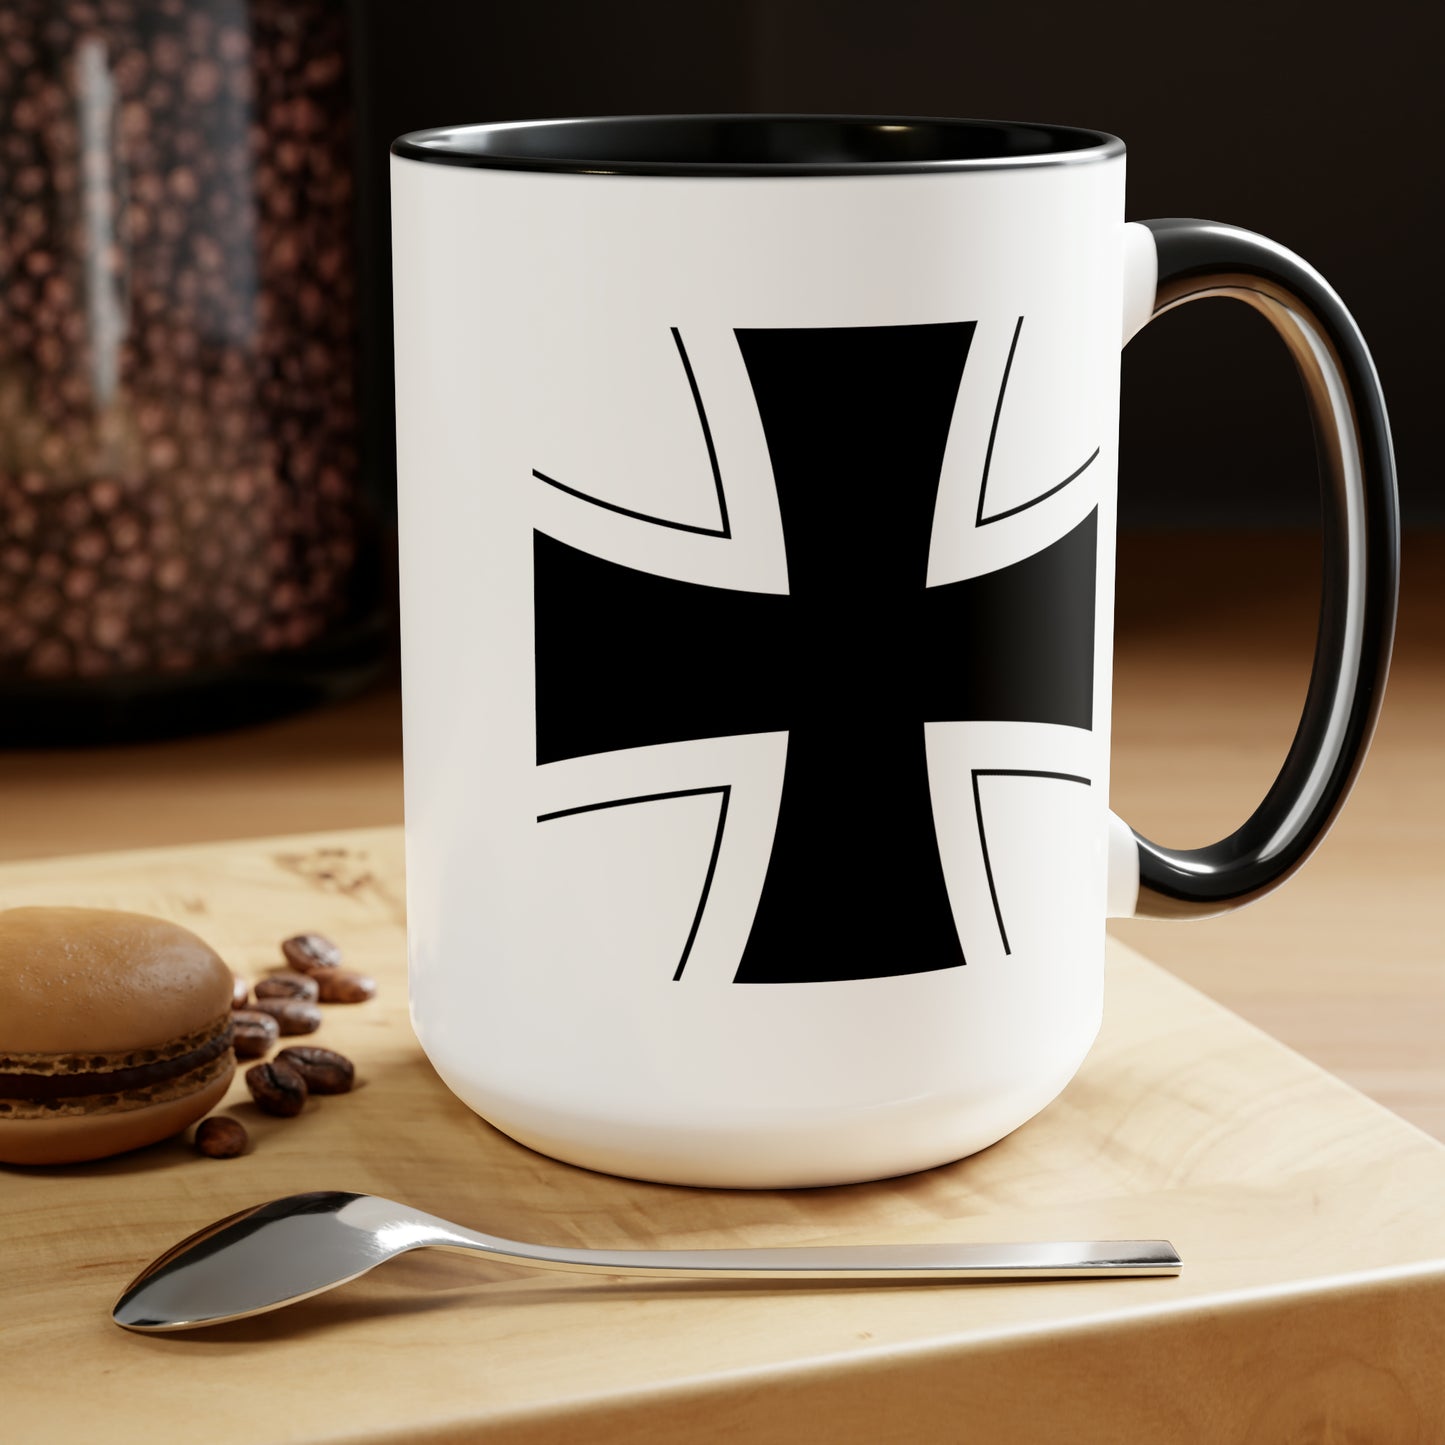 German Air Force Roundel Coffee Mug - Double Sided Black Accent Ceramic 15oz - by TheGlassyLass.com